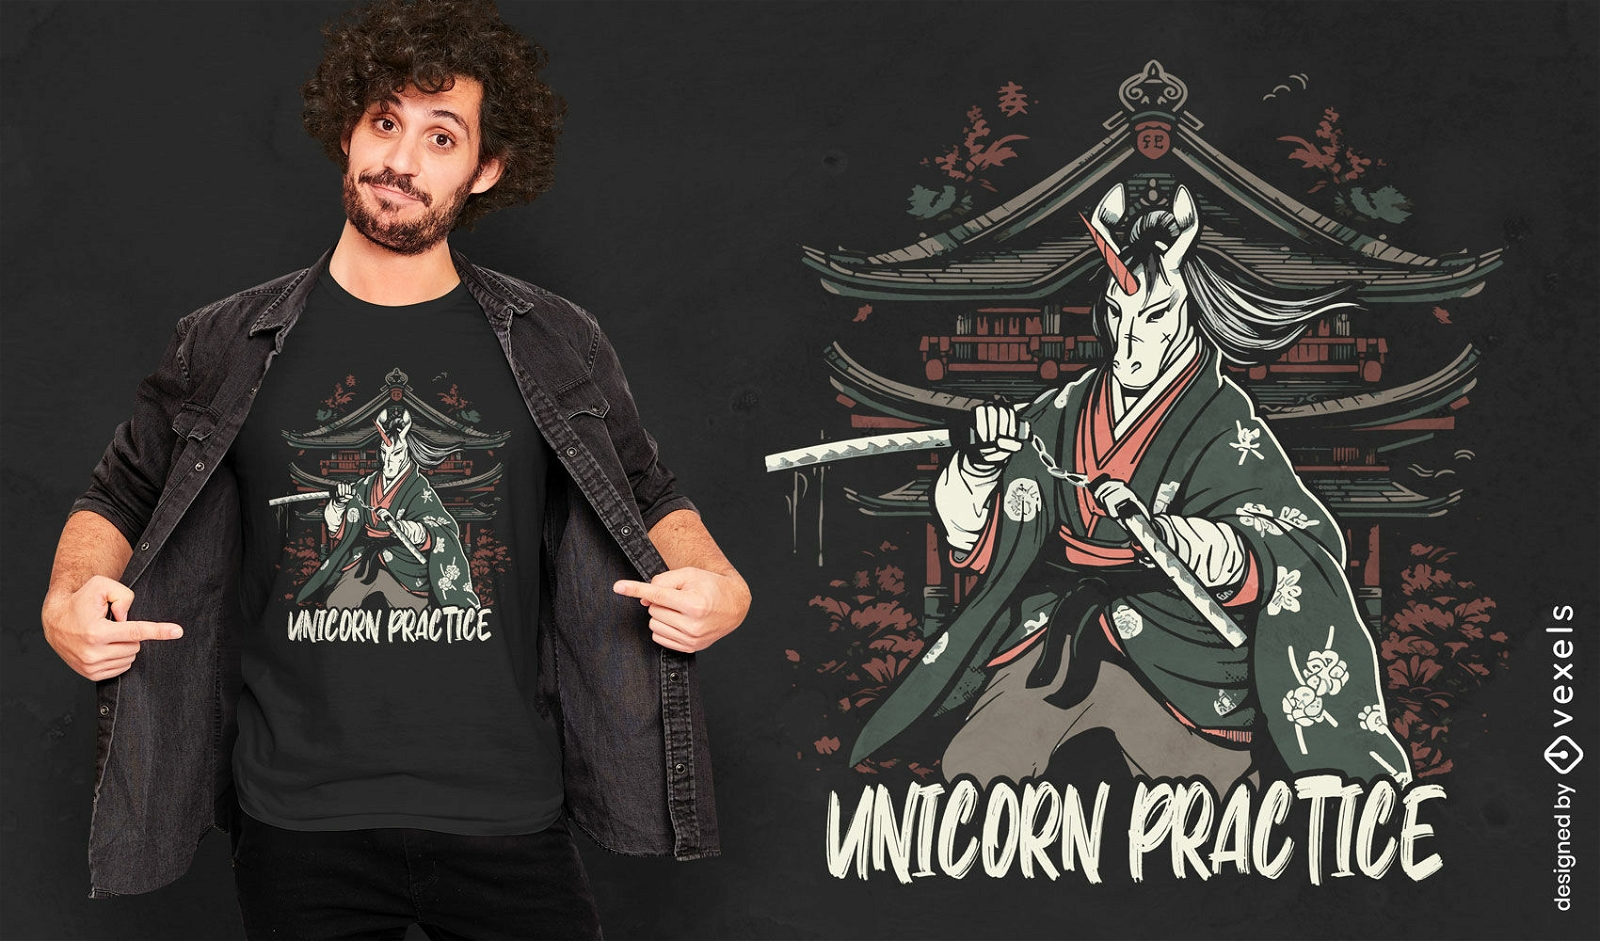 Unicorn samurai warrior t-shirt design